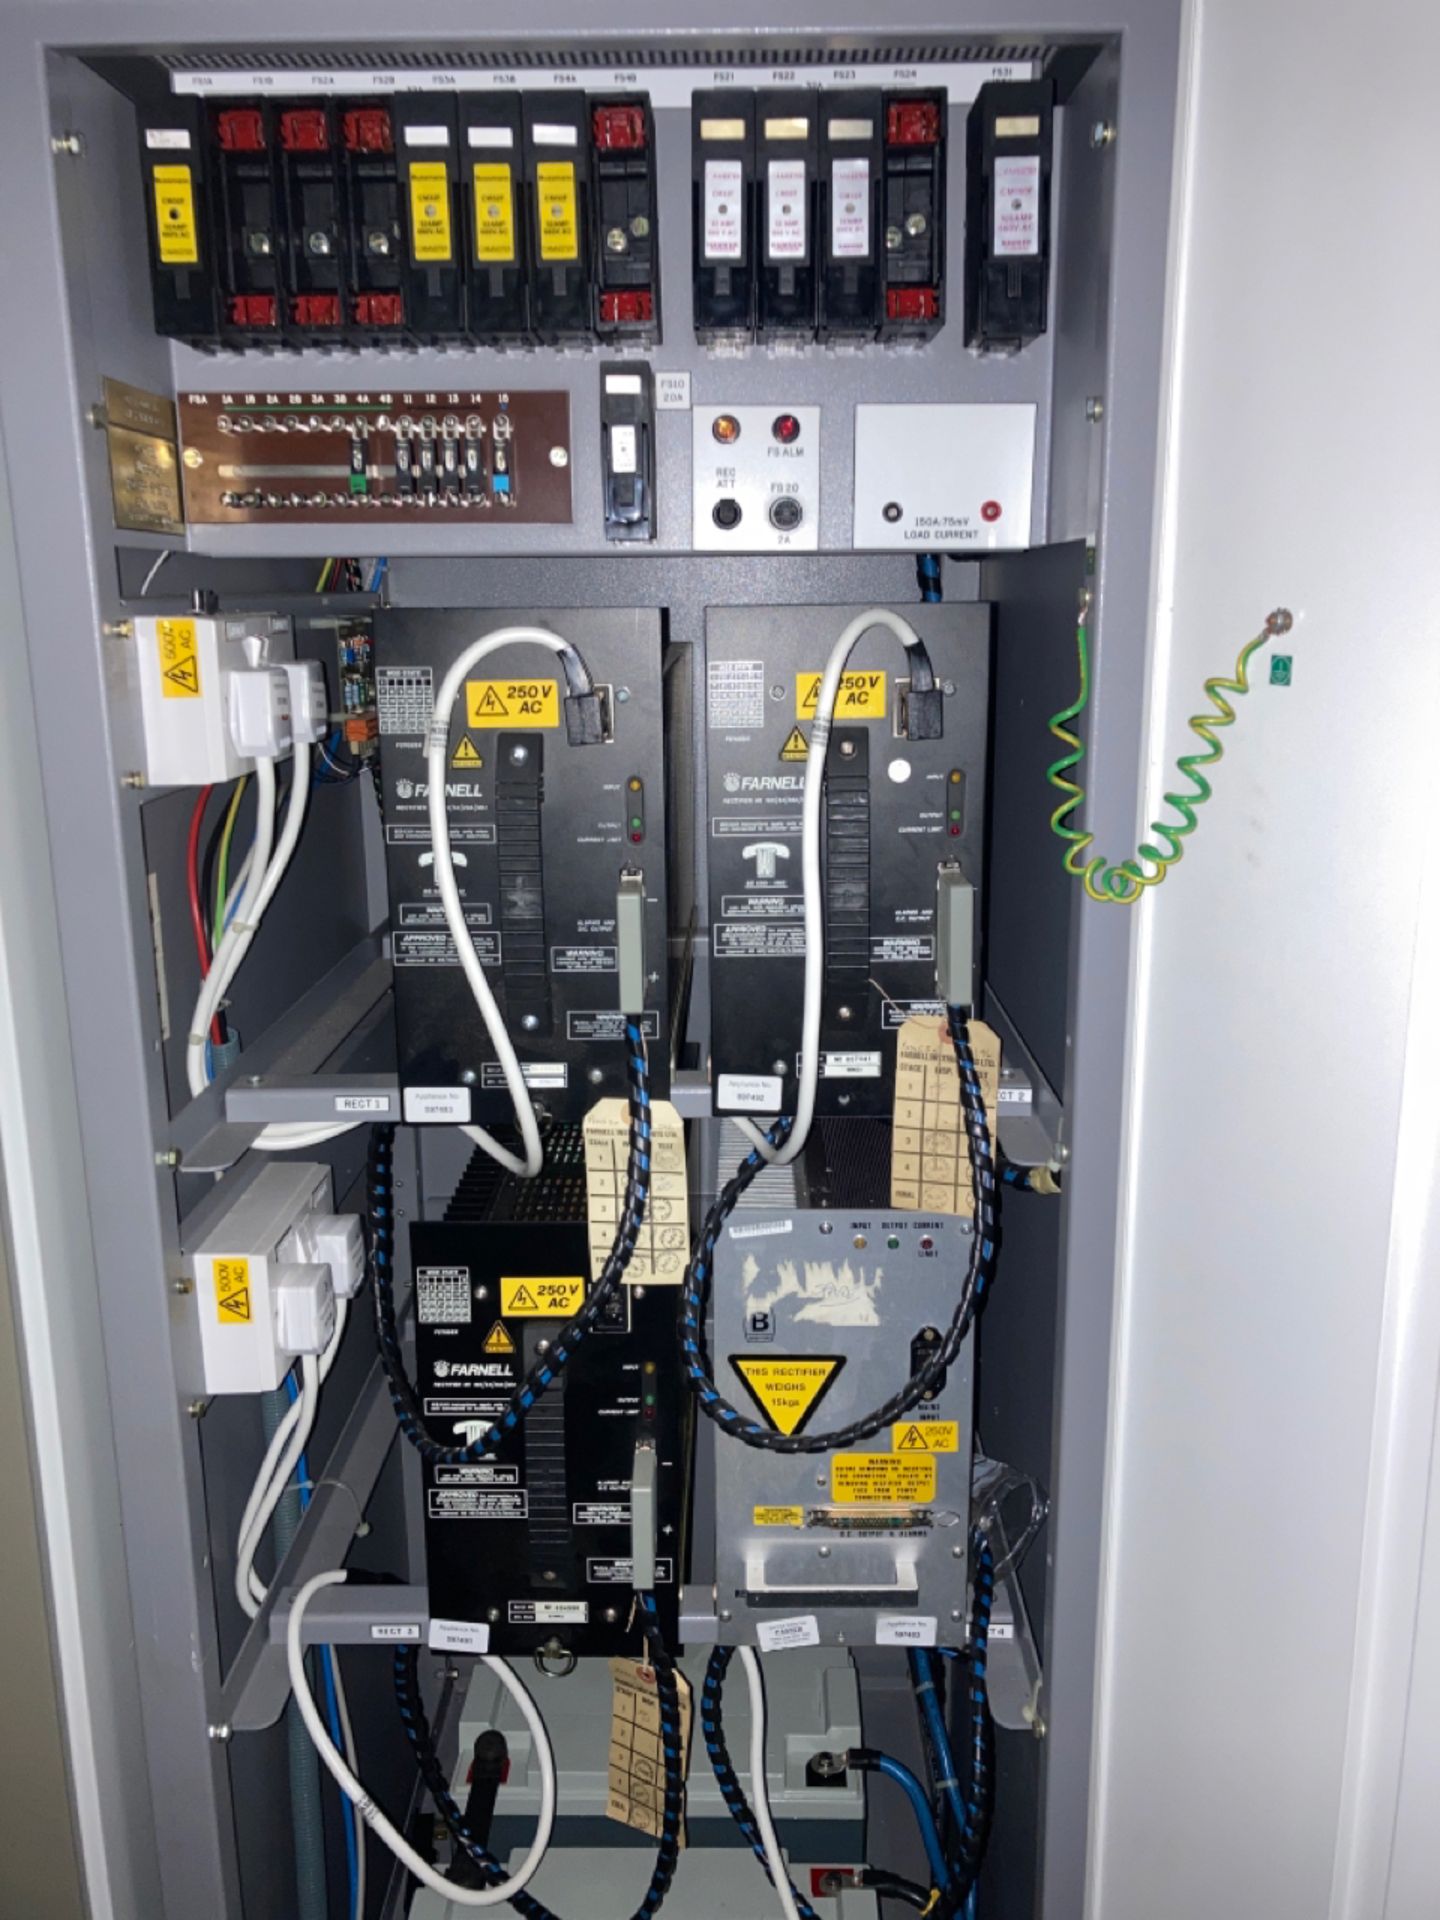 Mercury communications power cabinet